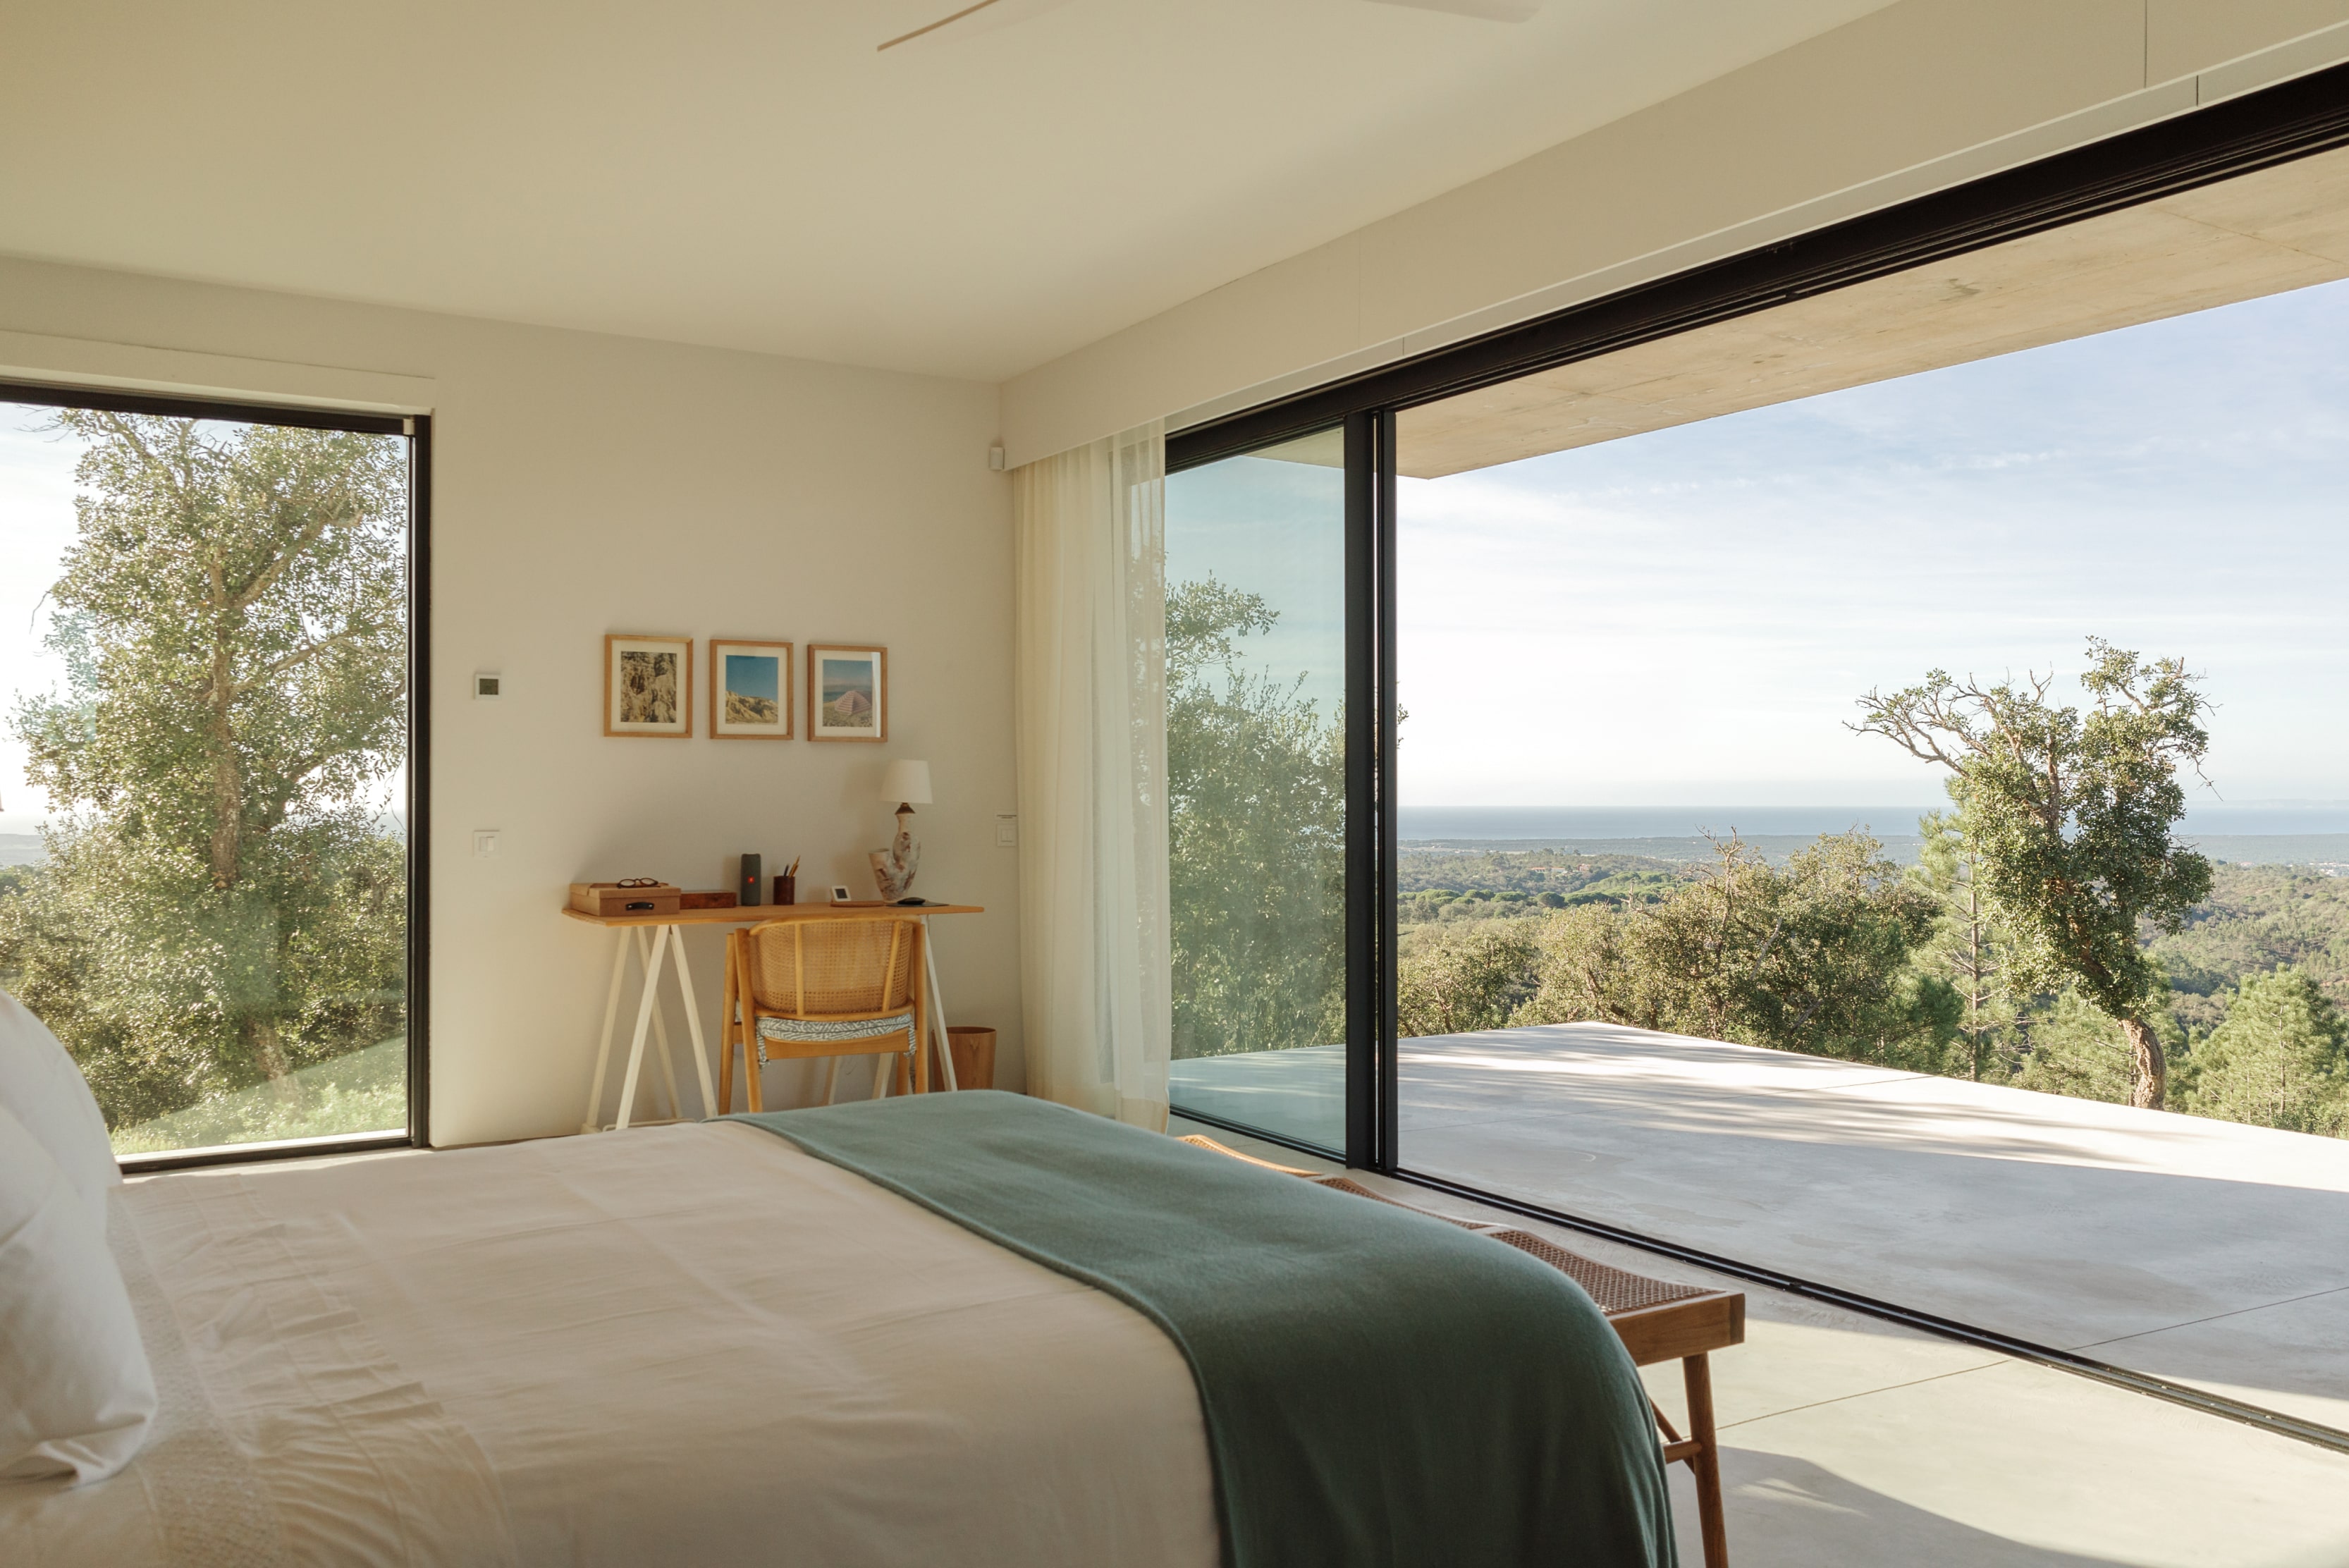 casa-das-4-serras-bedroom-bed-view-terrace-min